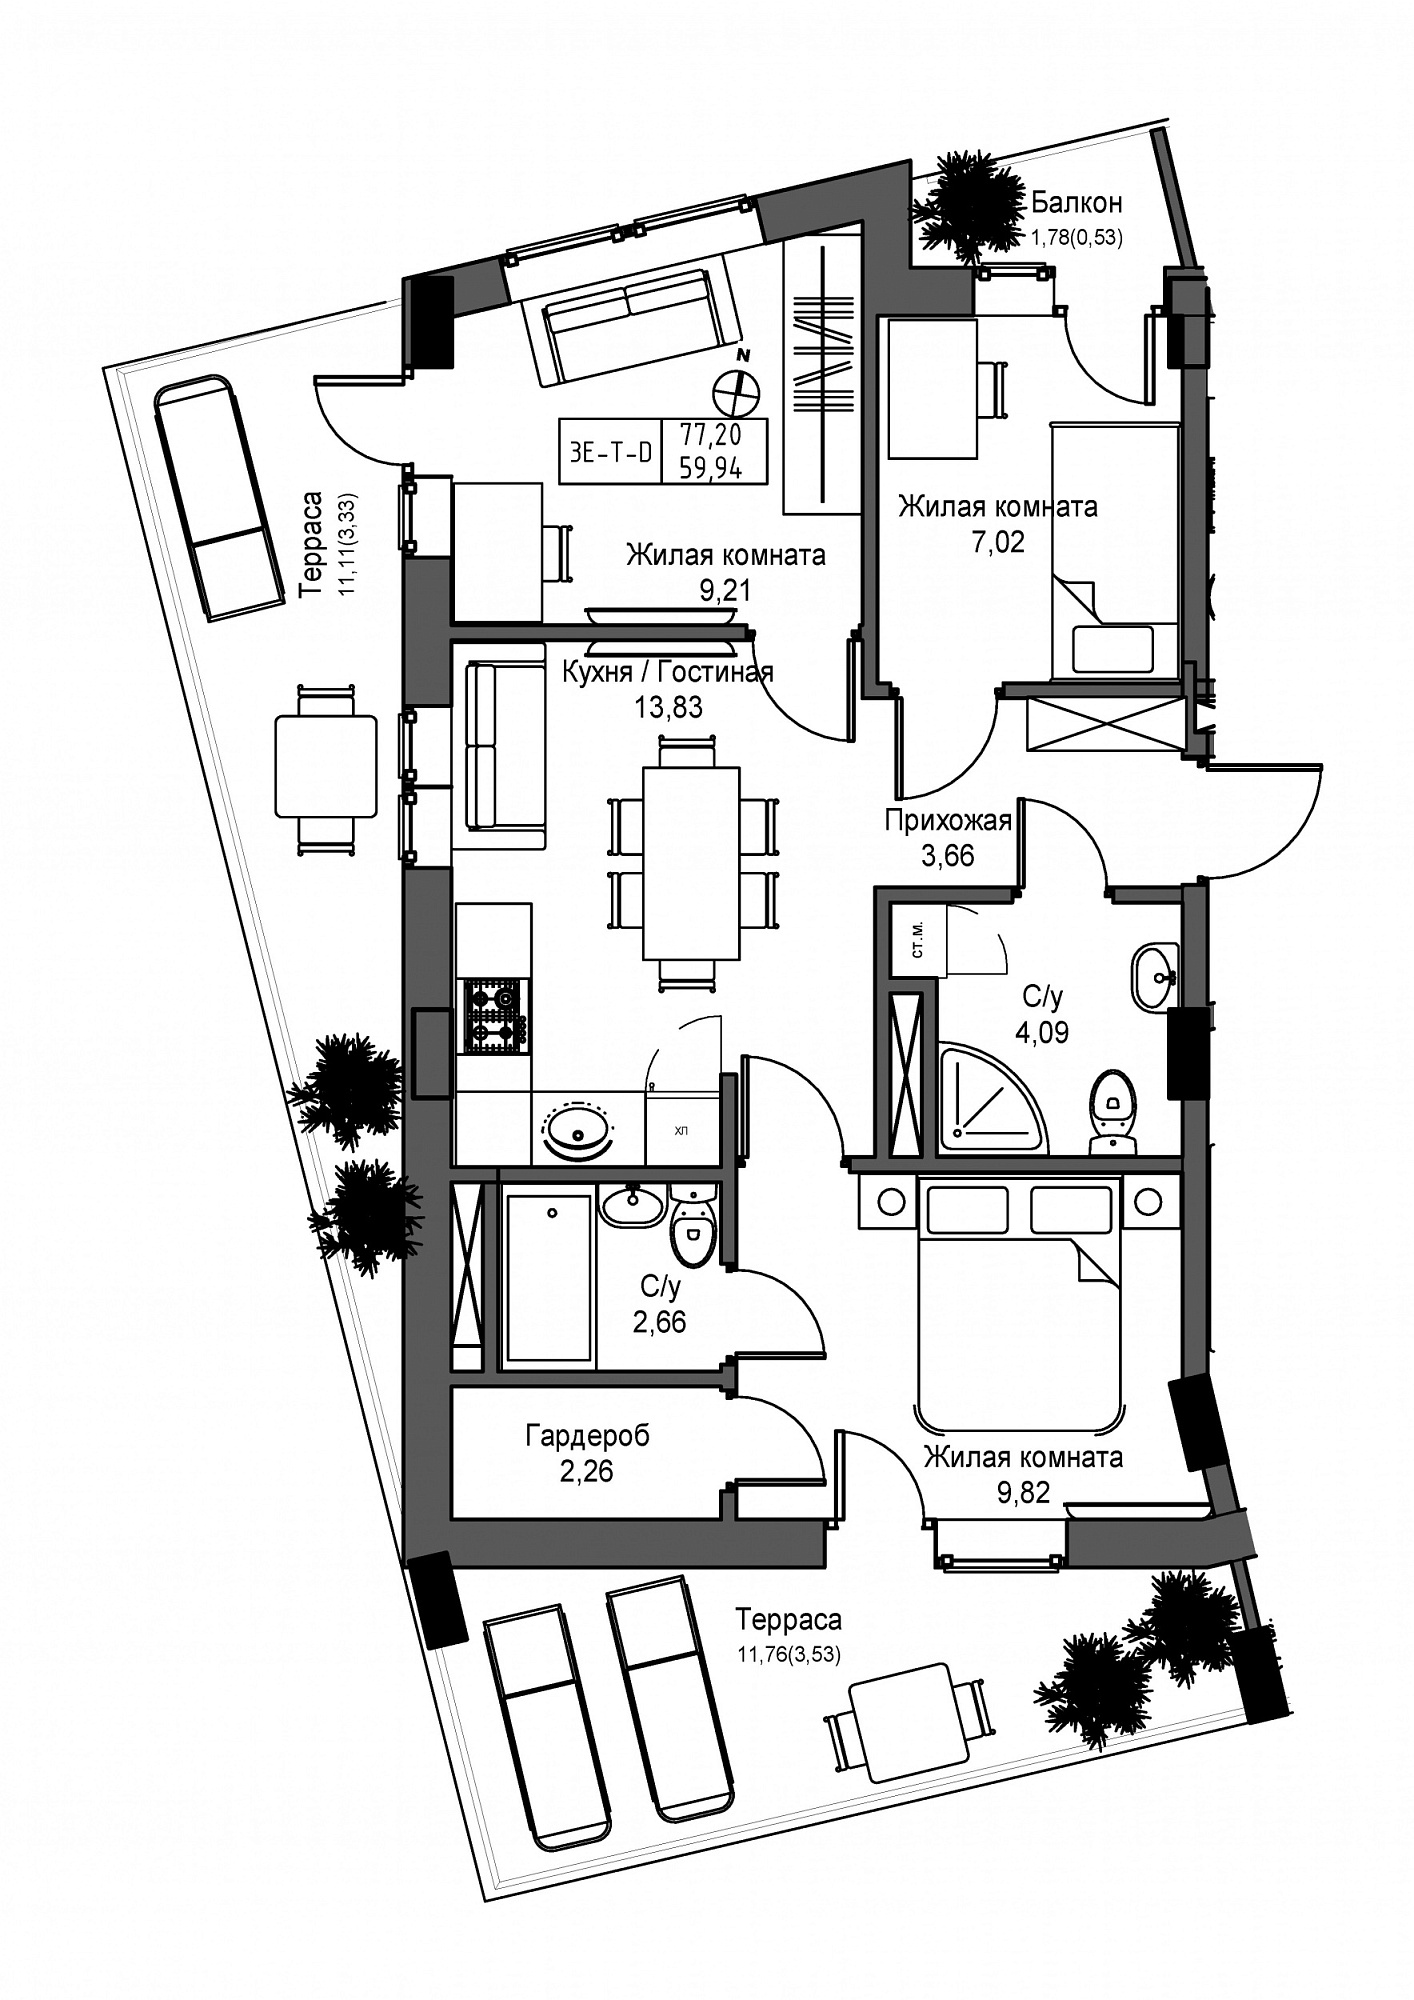 Планування 3-к квартира площею 59.94м2, UM-004-08/0015.